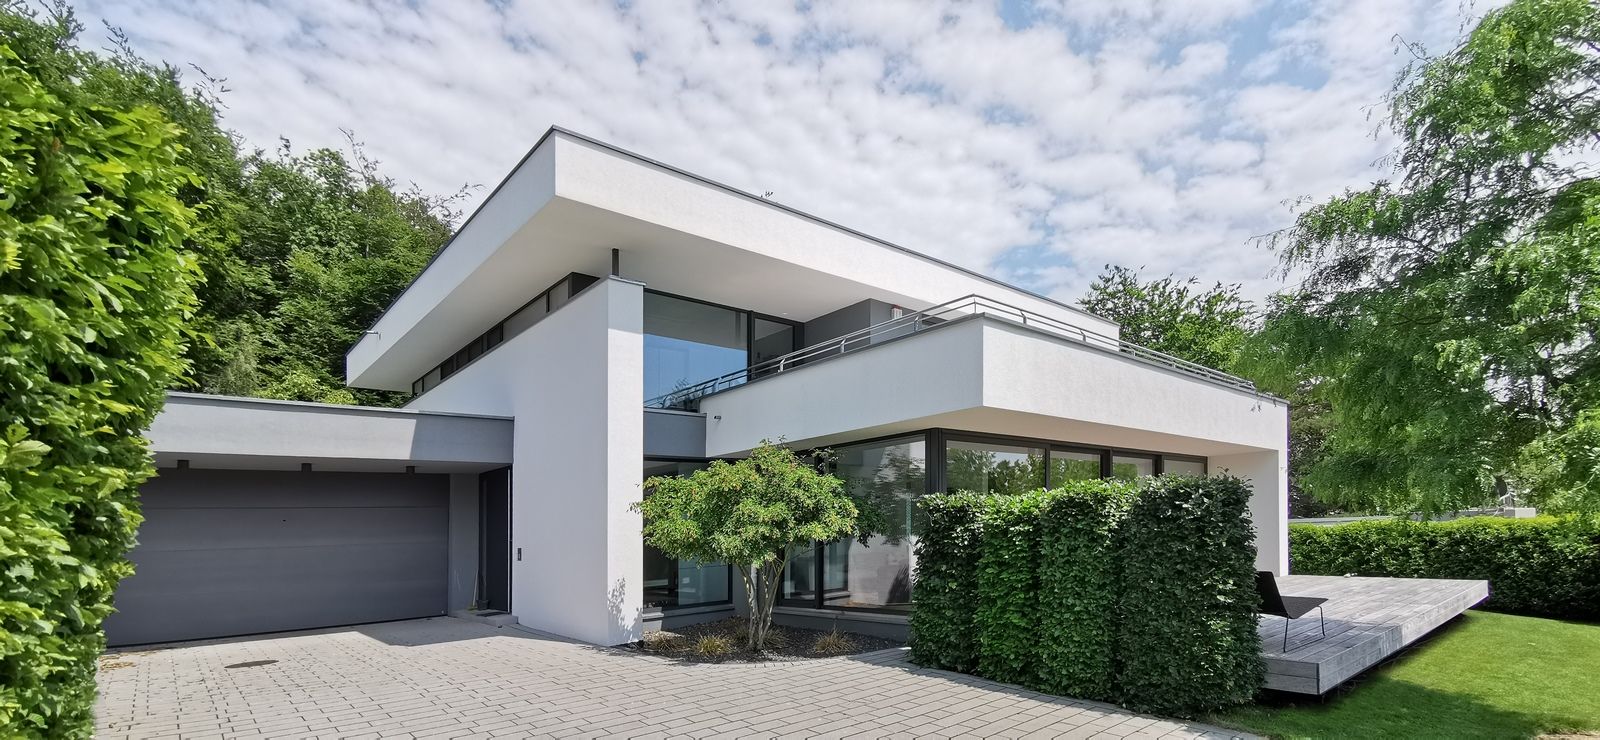 Moderne Villa mit Flachdach in Bad Soden, Avantecture GmbH Avantecture GmbH Вілли